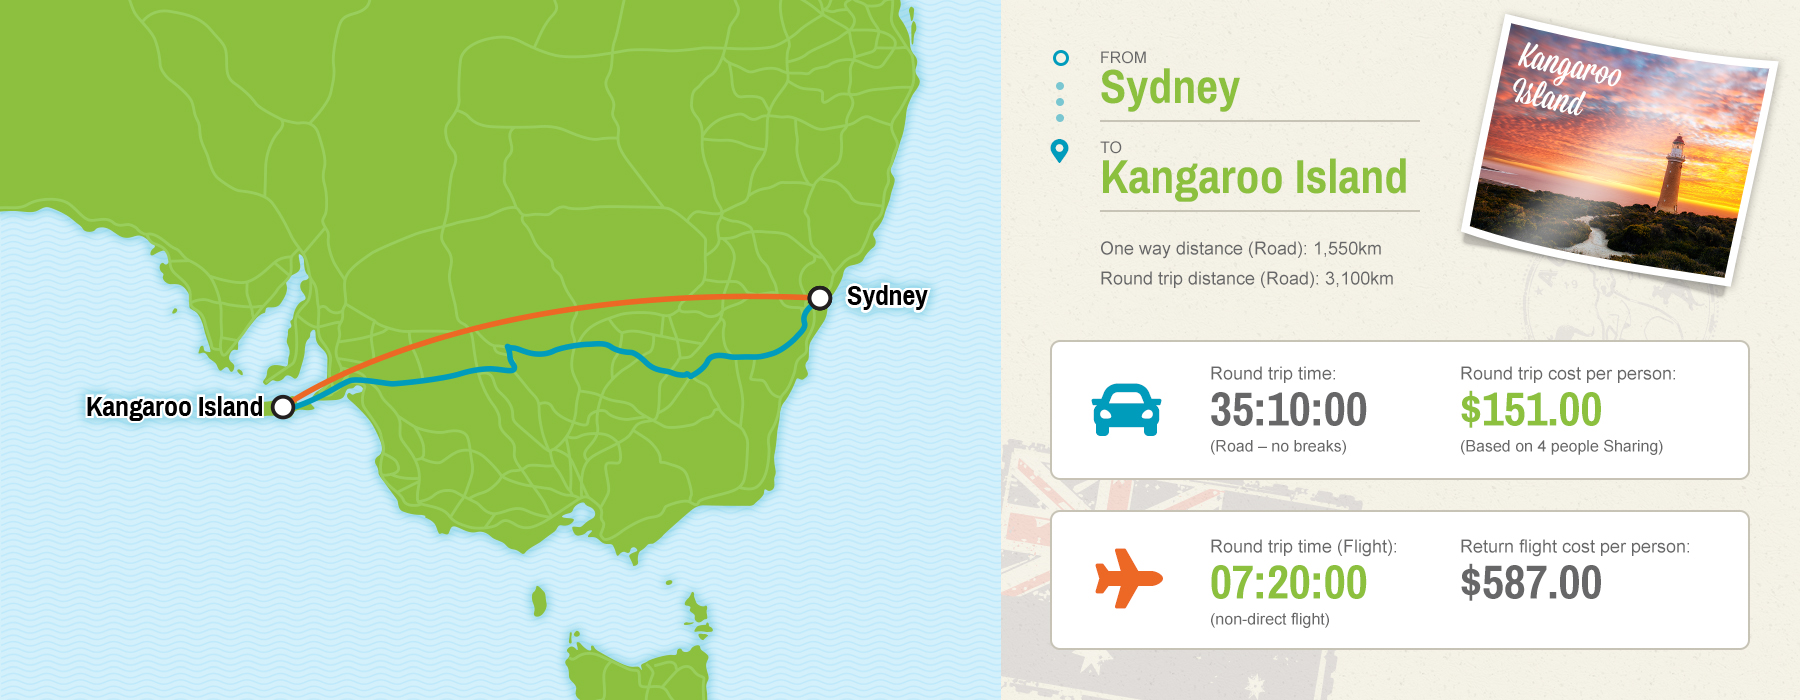 Sydney to Kangaroo Island map showing driving vs flying